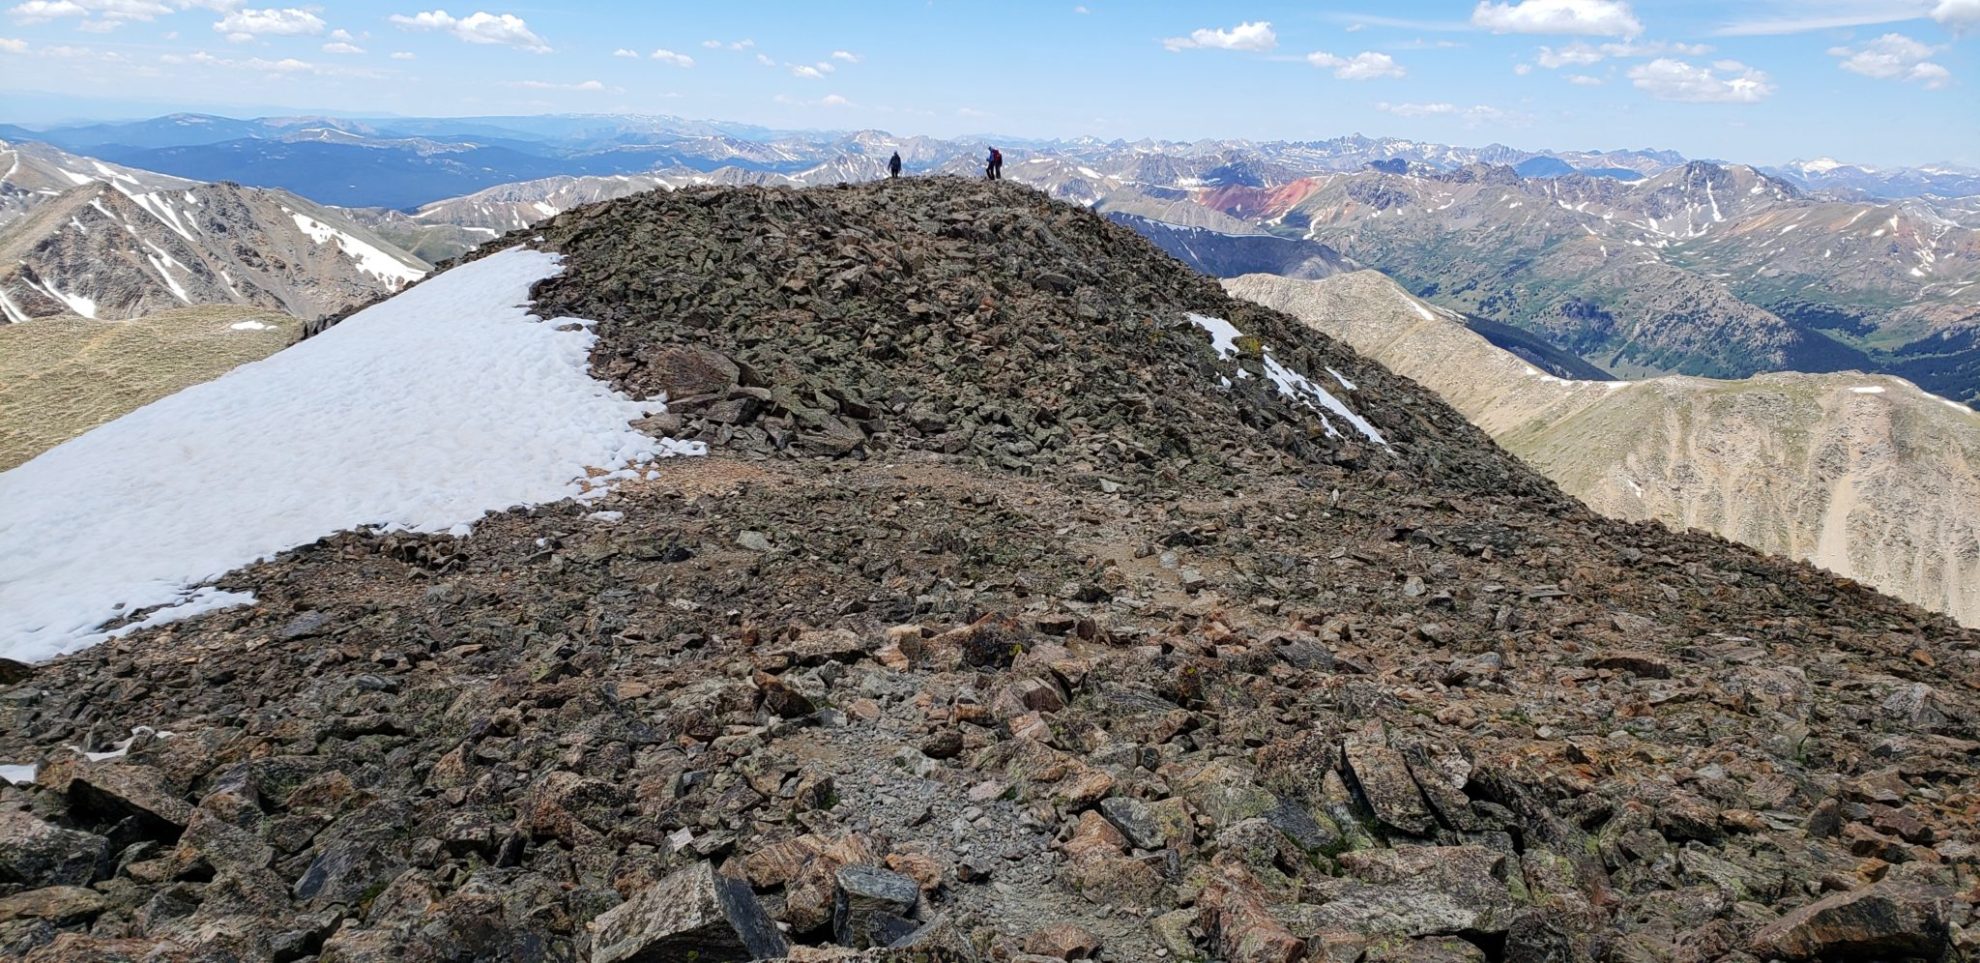 The southwest ridge on La Plata Peak